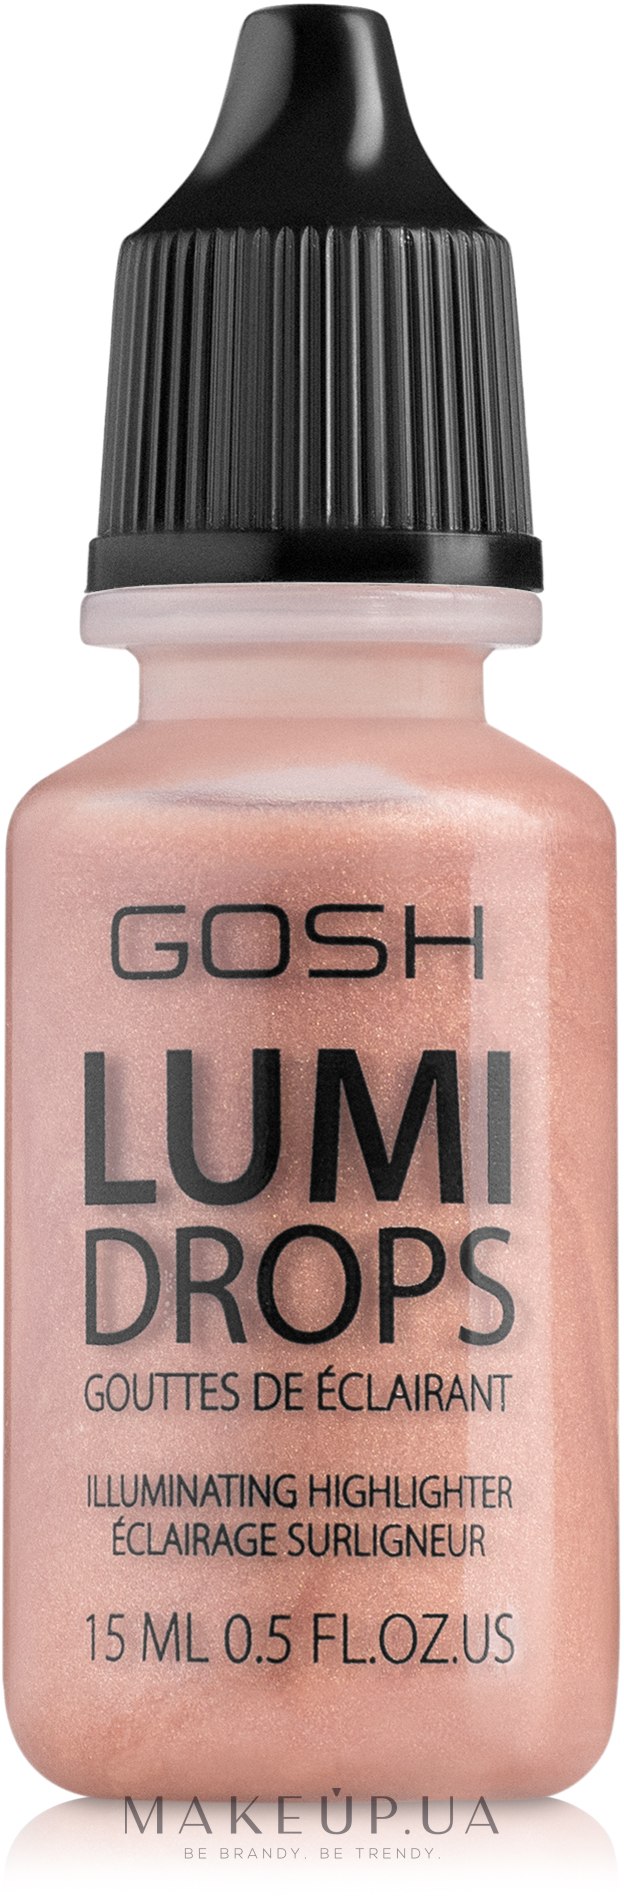 Gosh Lumi Drops Highlighter